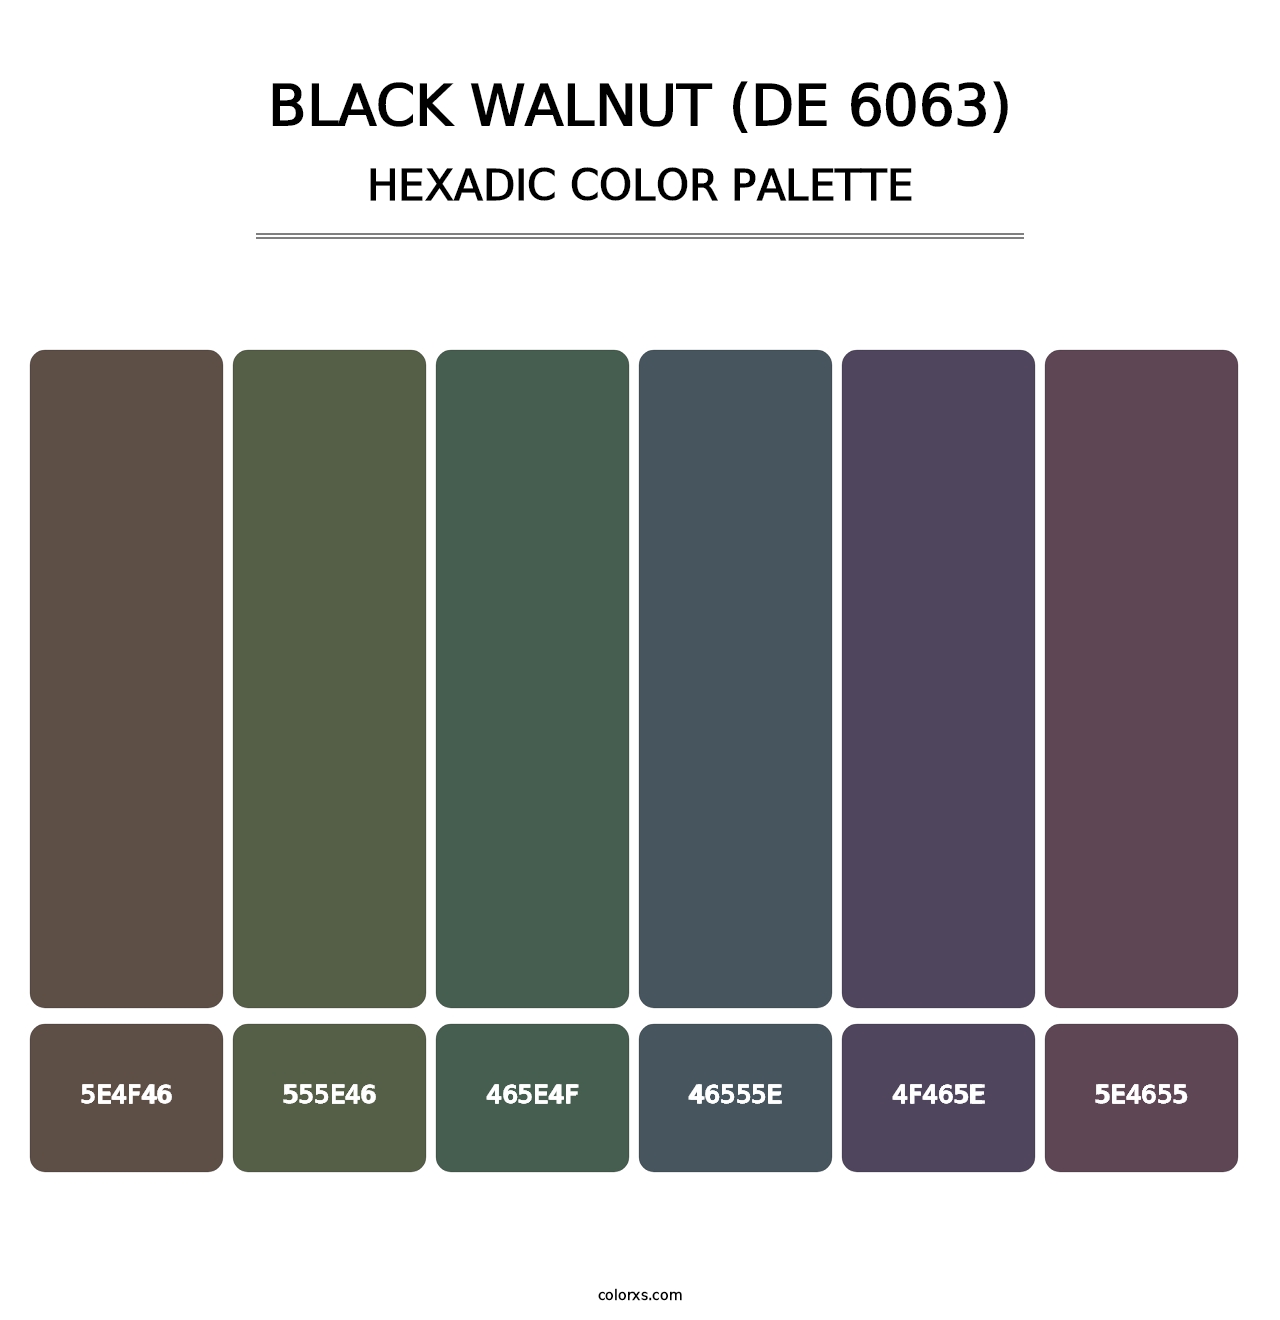 Black Walnut (DE 6063) - Hexadic Color Palette